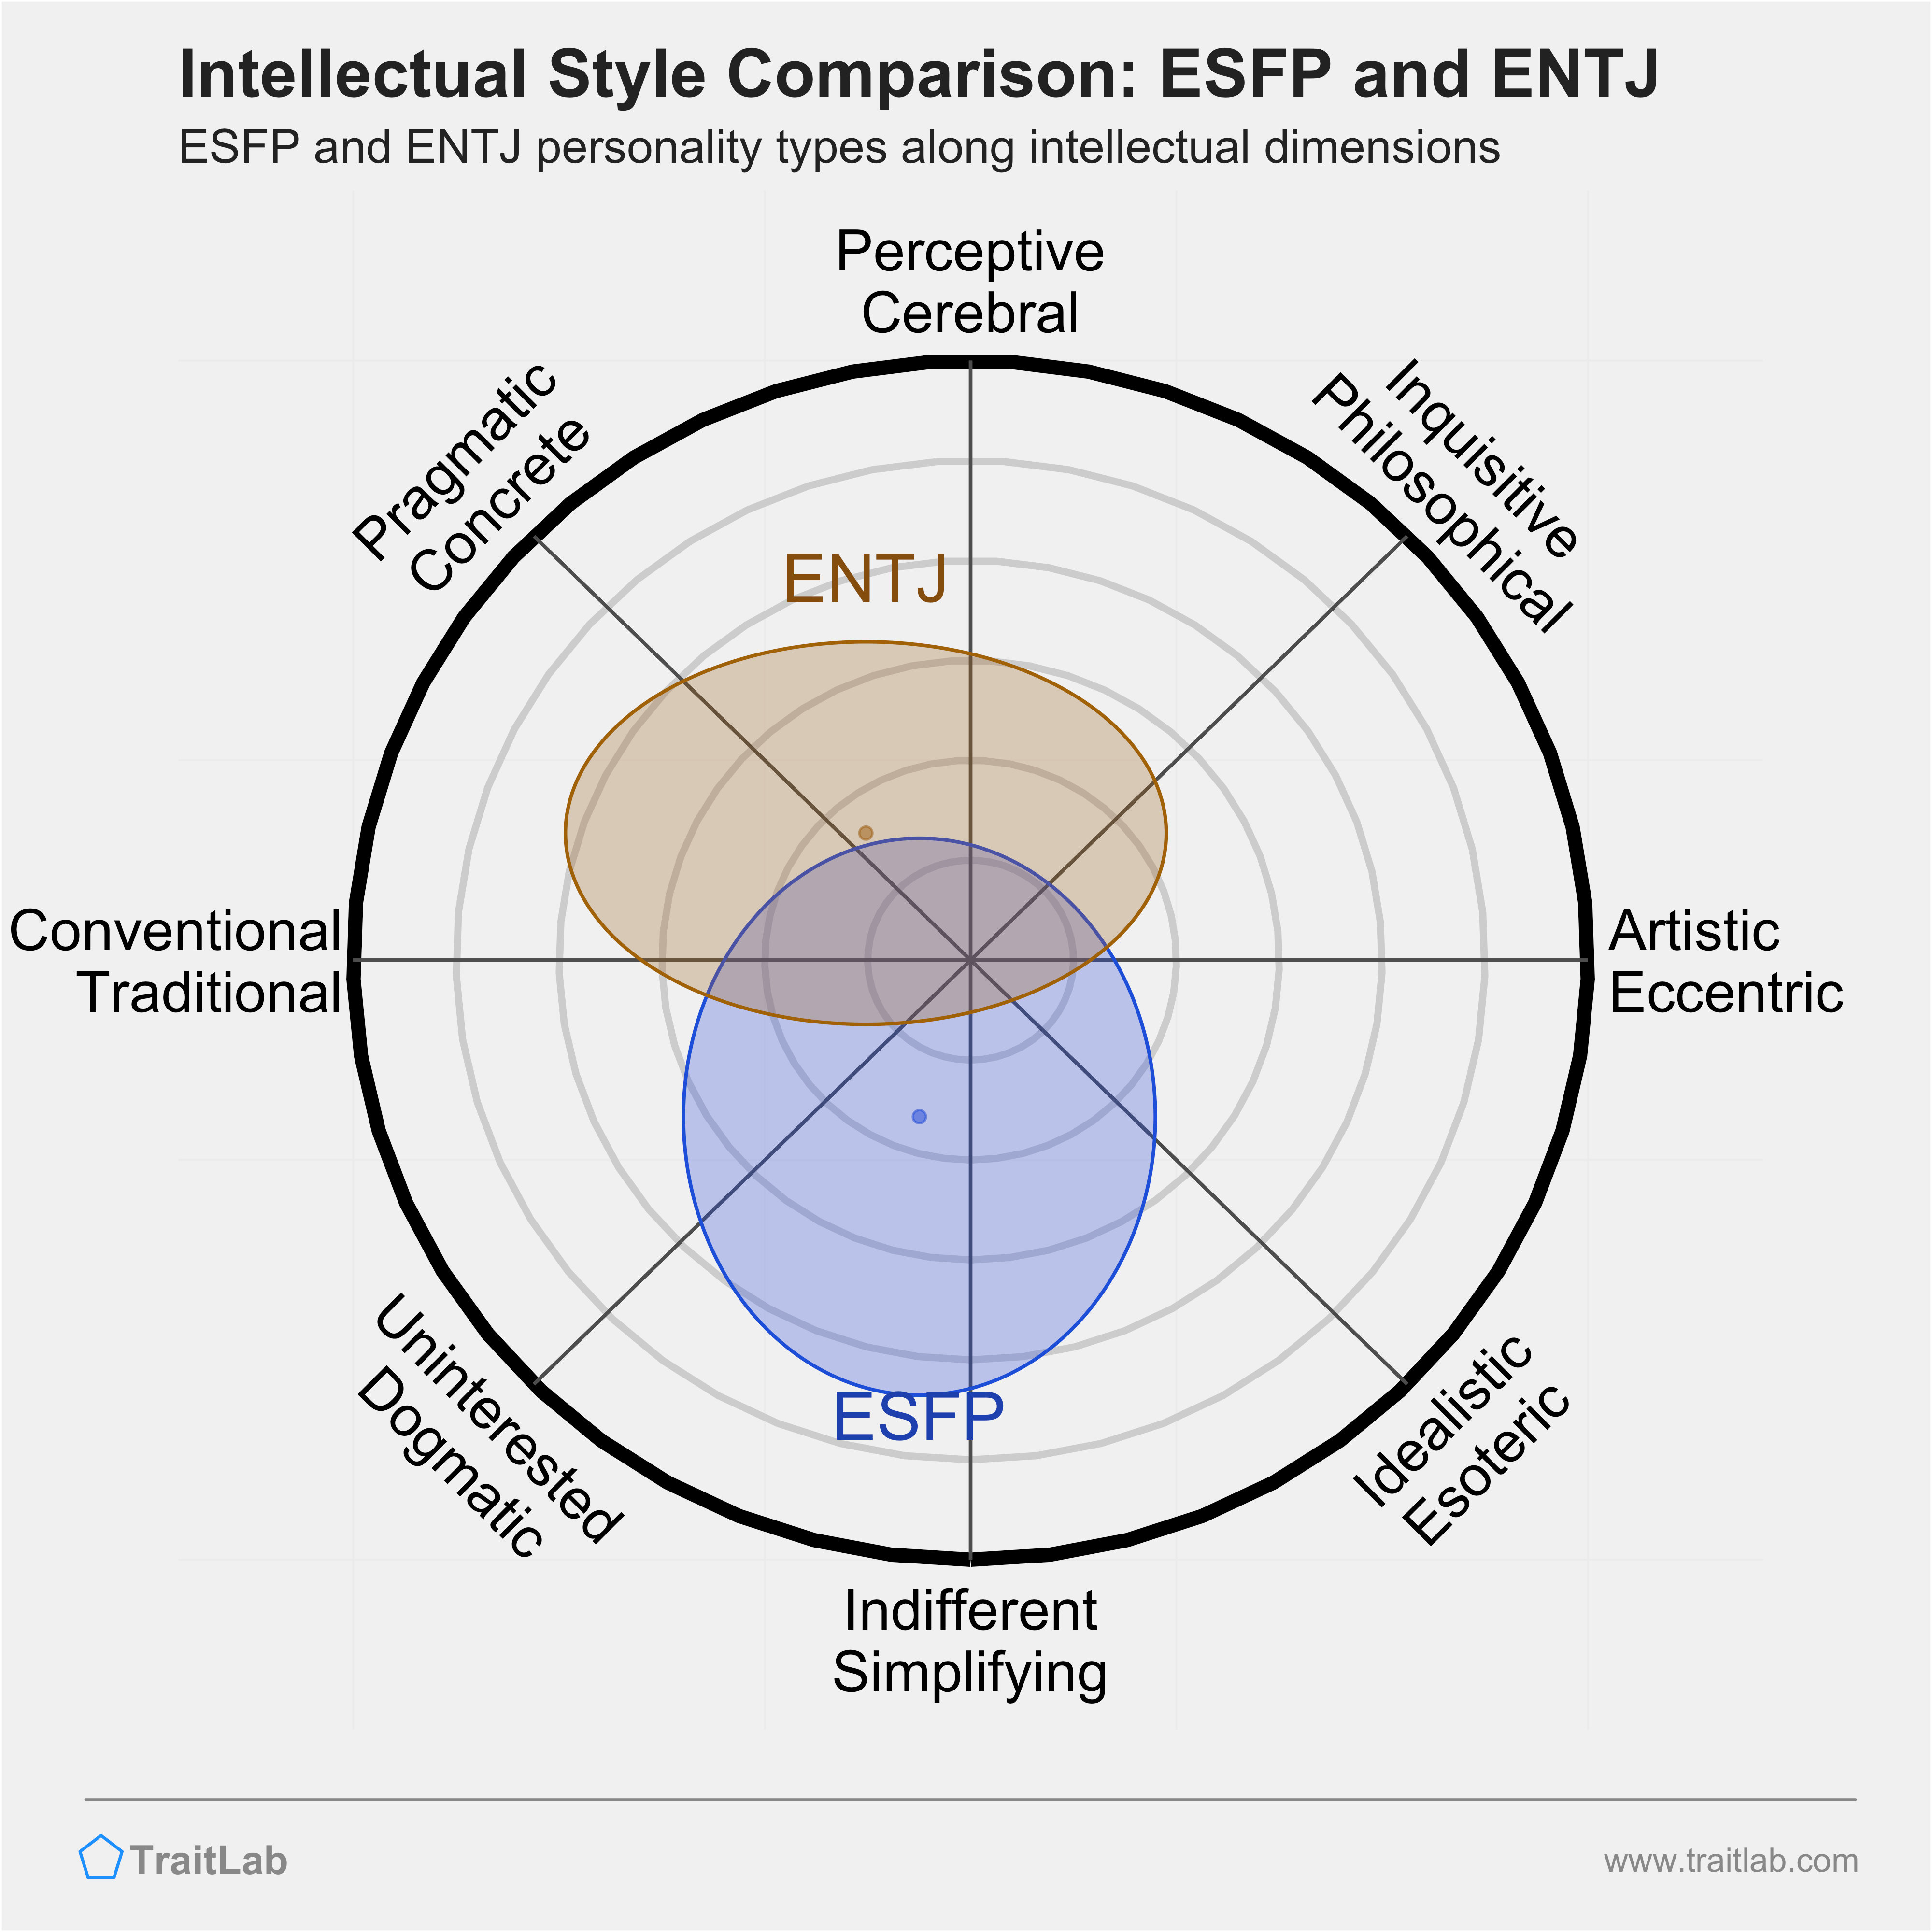 ESFP and ENTJ comparison across intellectual dimensions